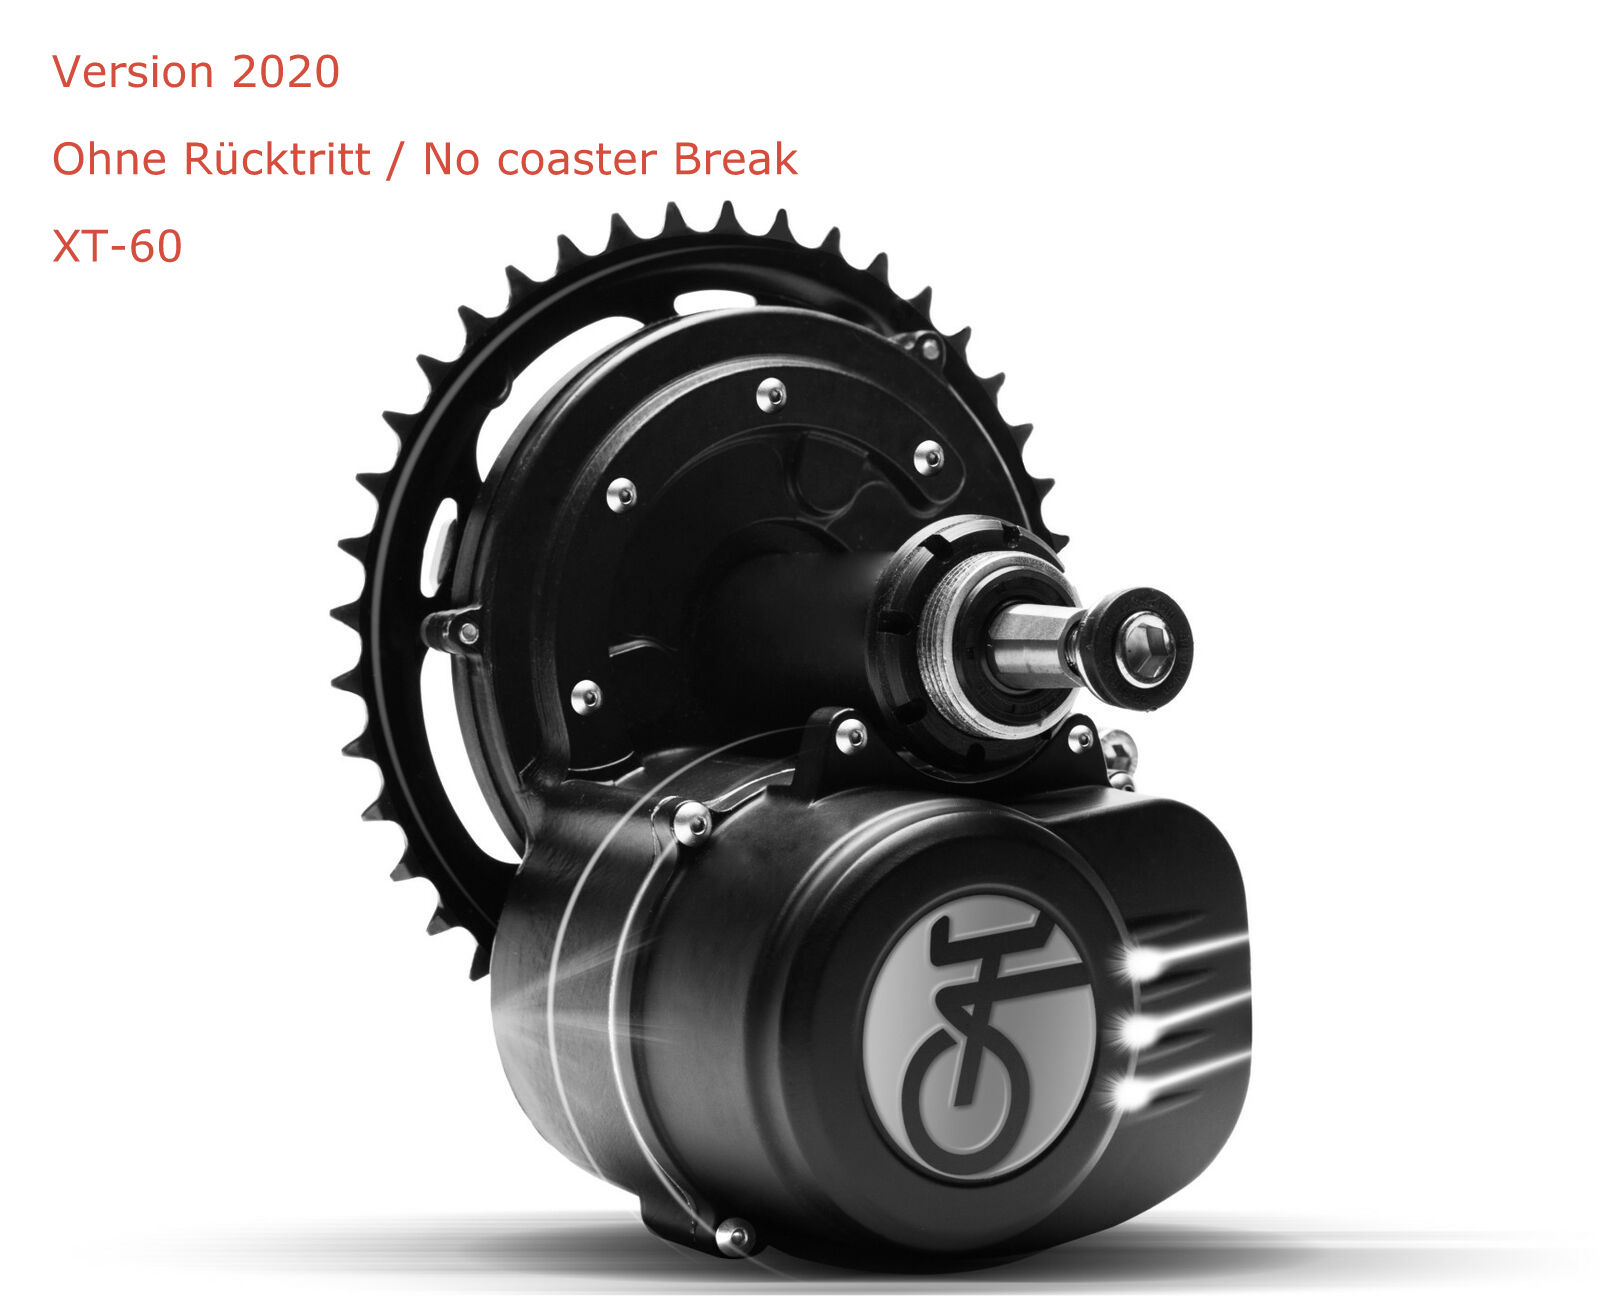 Tongsheng TSDZ2 36V 250W Mid Motor + Accessories (Edition 2020) - Freewheel